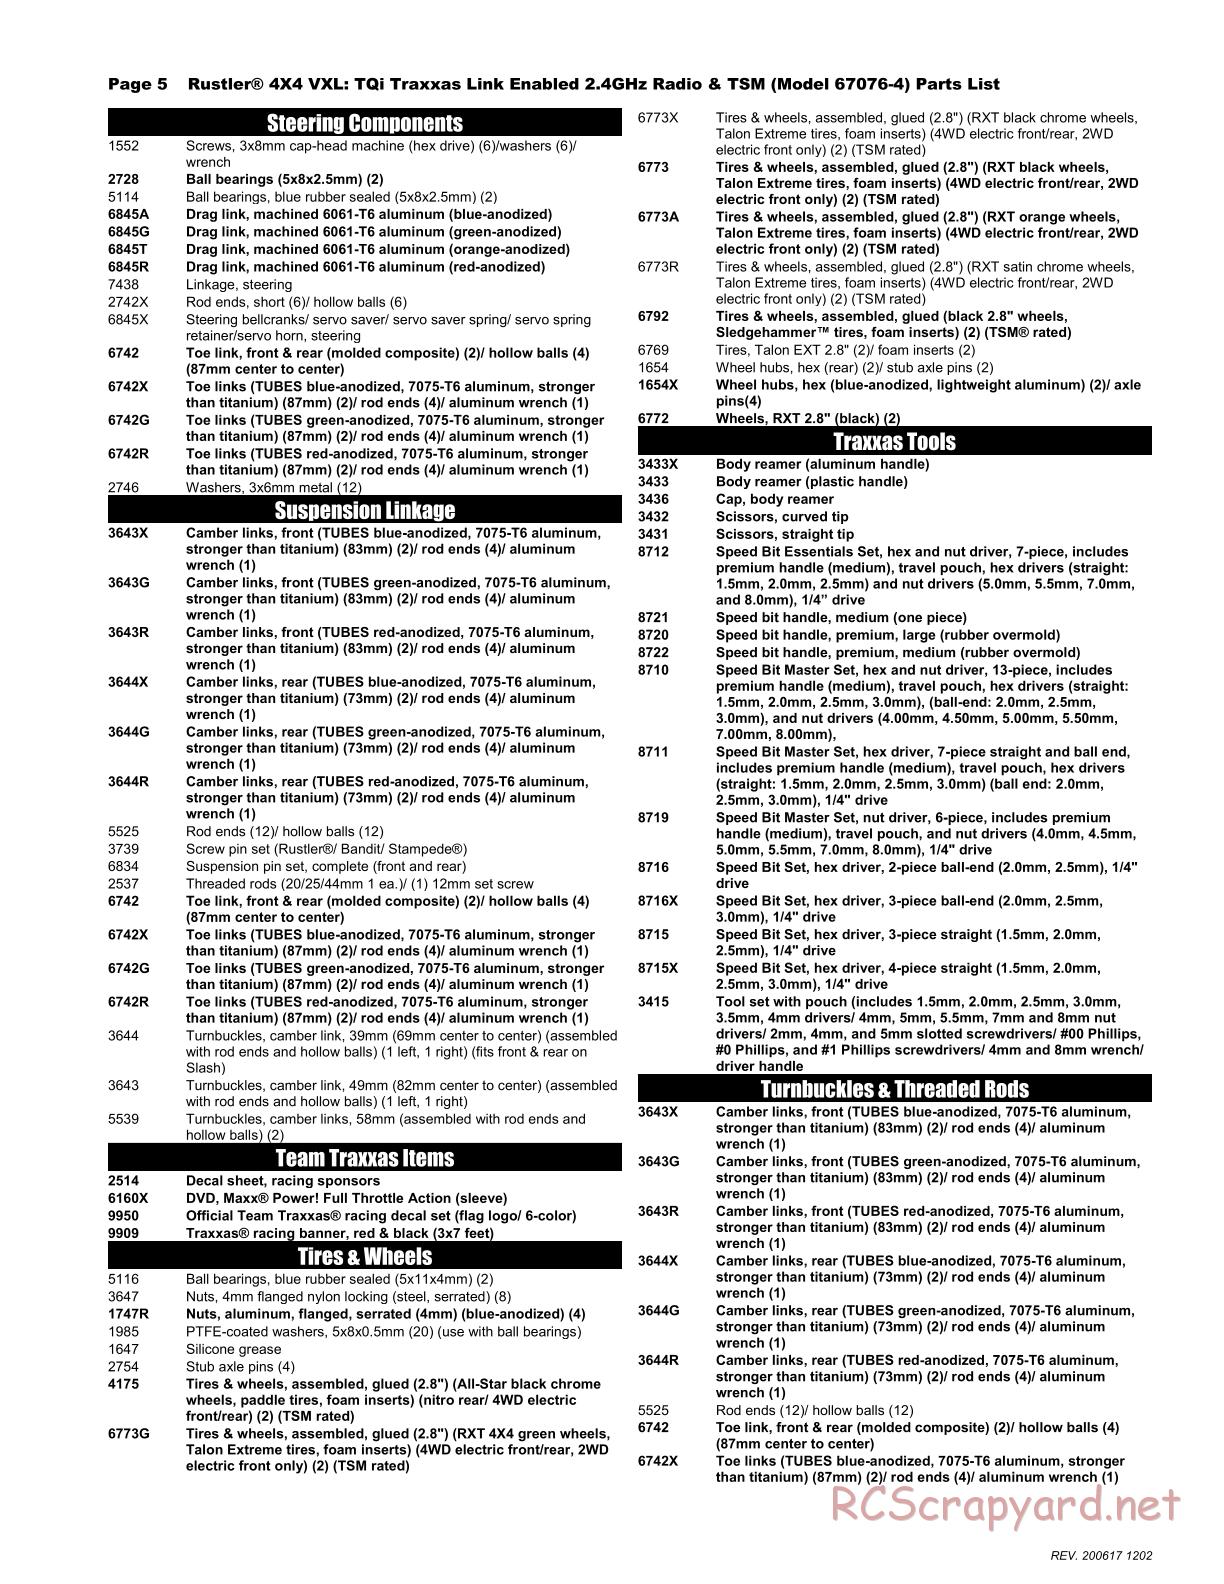 Traxxas - Rustler 4x4 VXL - Parts List - Page 5